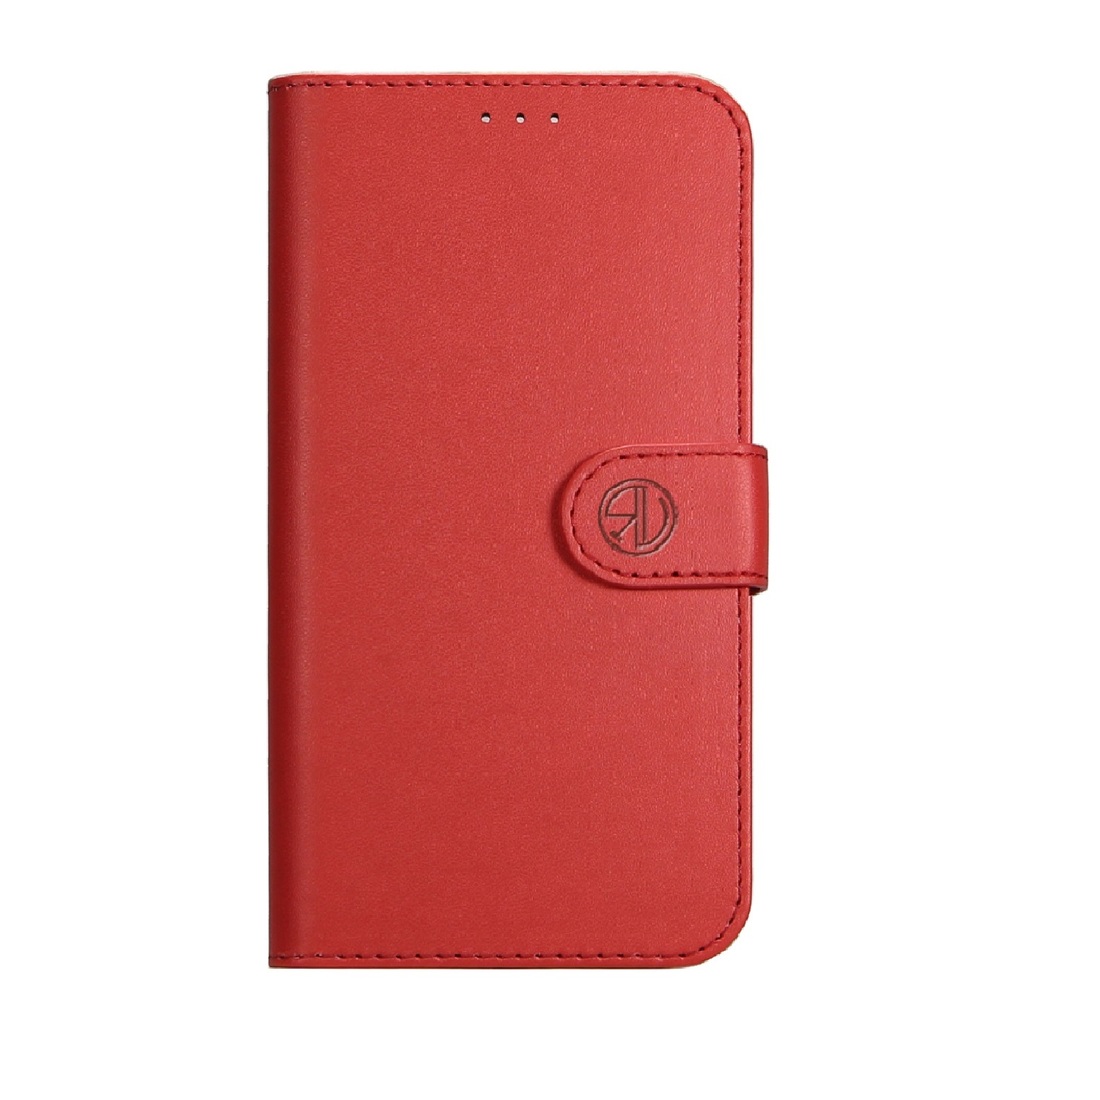 Super Wallet Case for iphone 7/8/SE Red